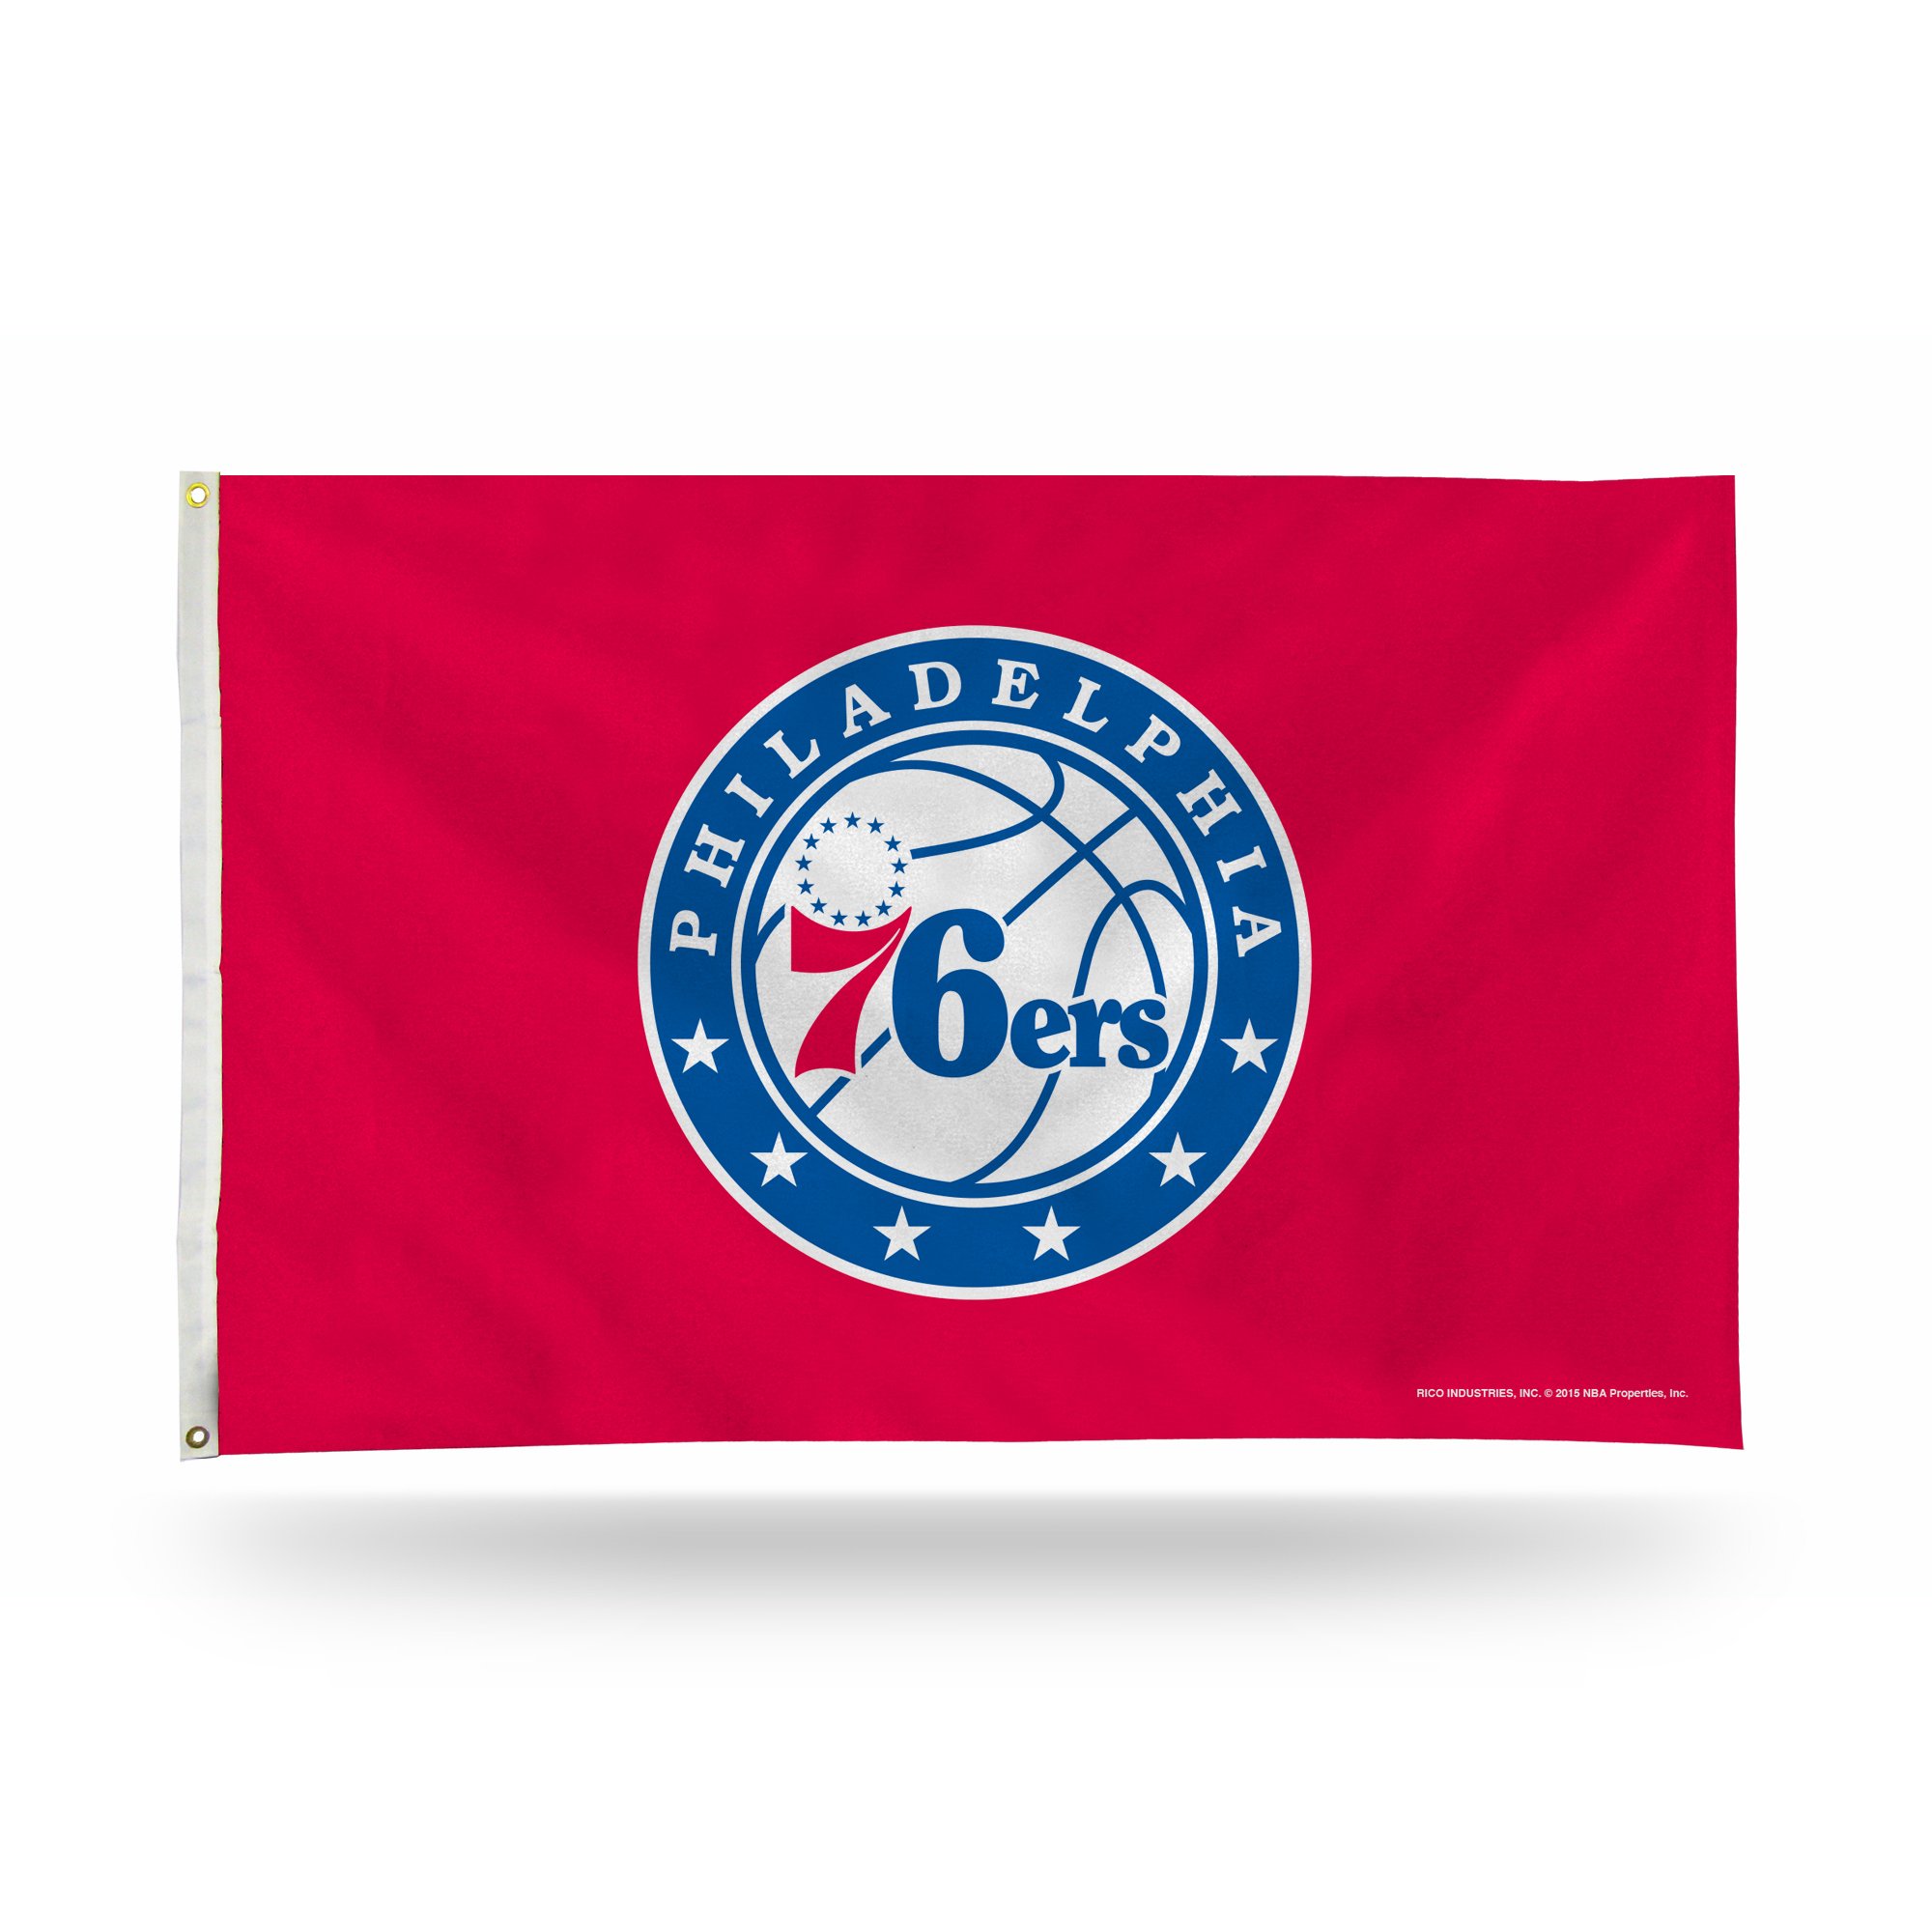 Rico 3' x 5' Blue and Pink NBA Philadelphia 76ers Rectangular Banner Flag